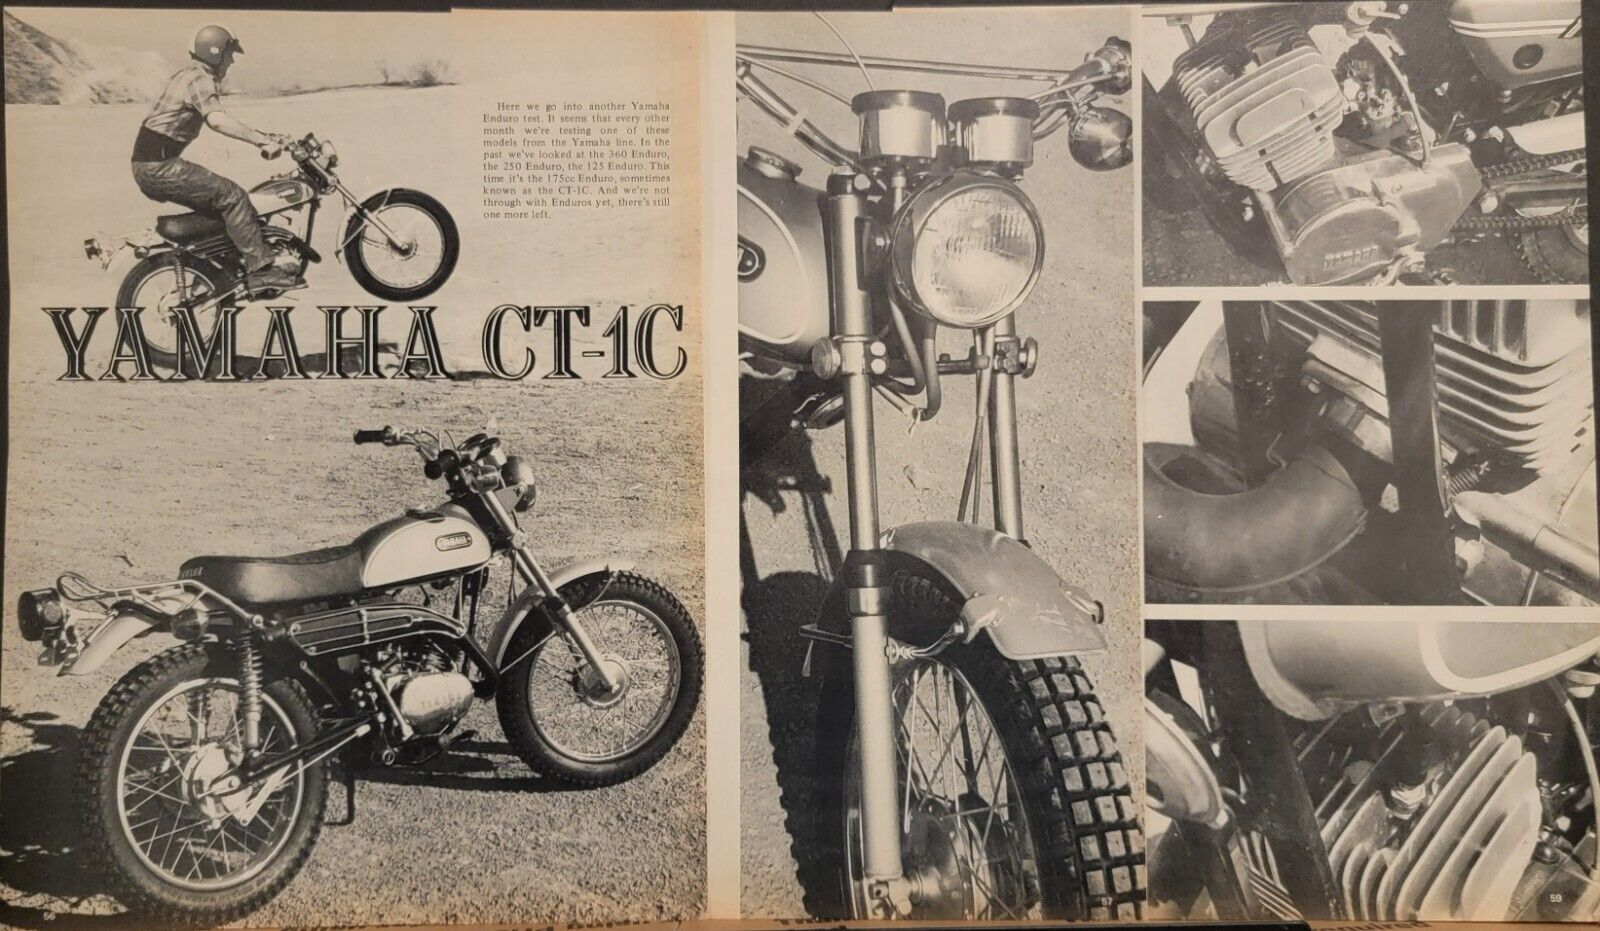 1971 Yamaha CT1C 4p Test Article